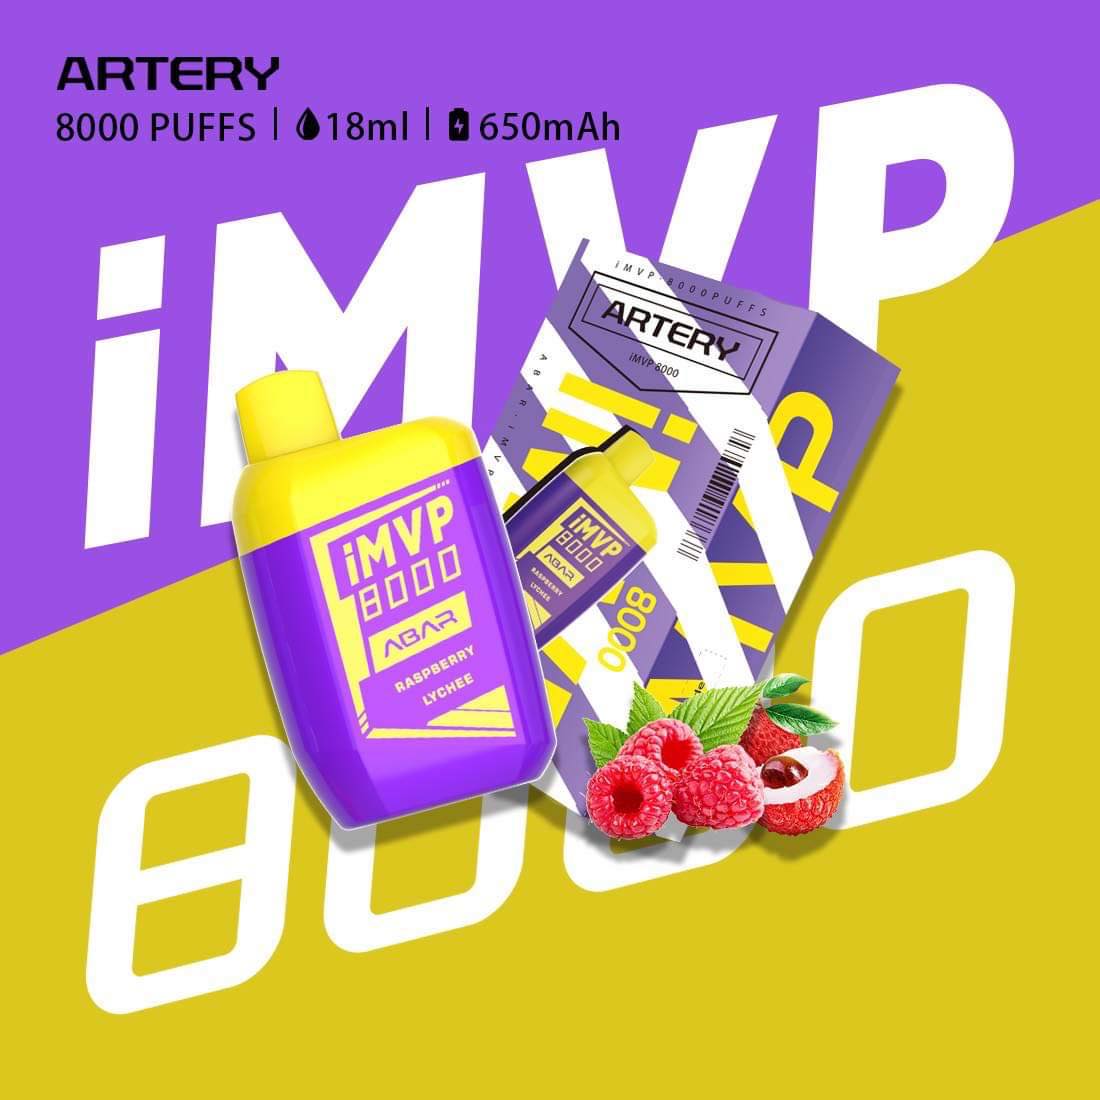 Arterie iMVP 8000 pust - 5